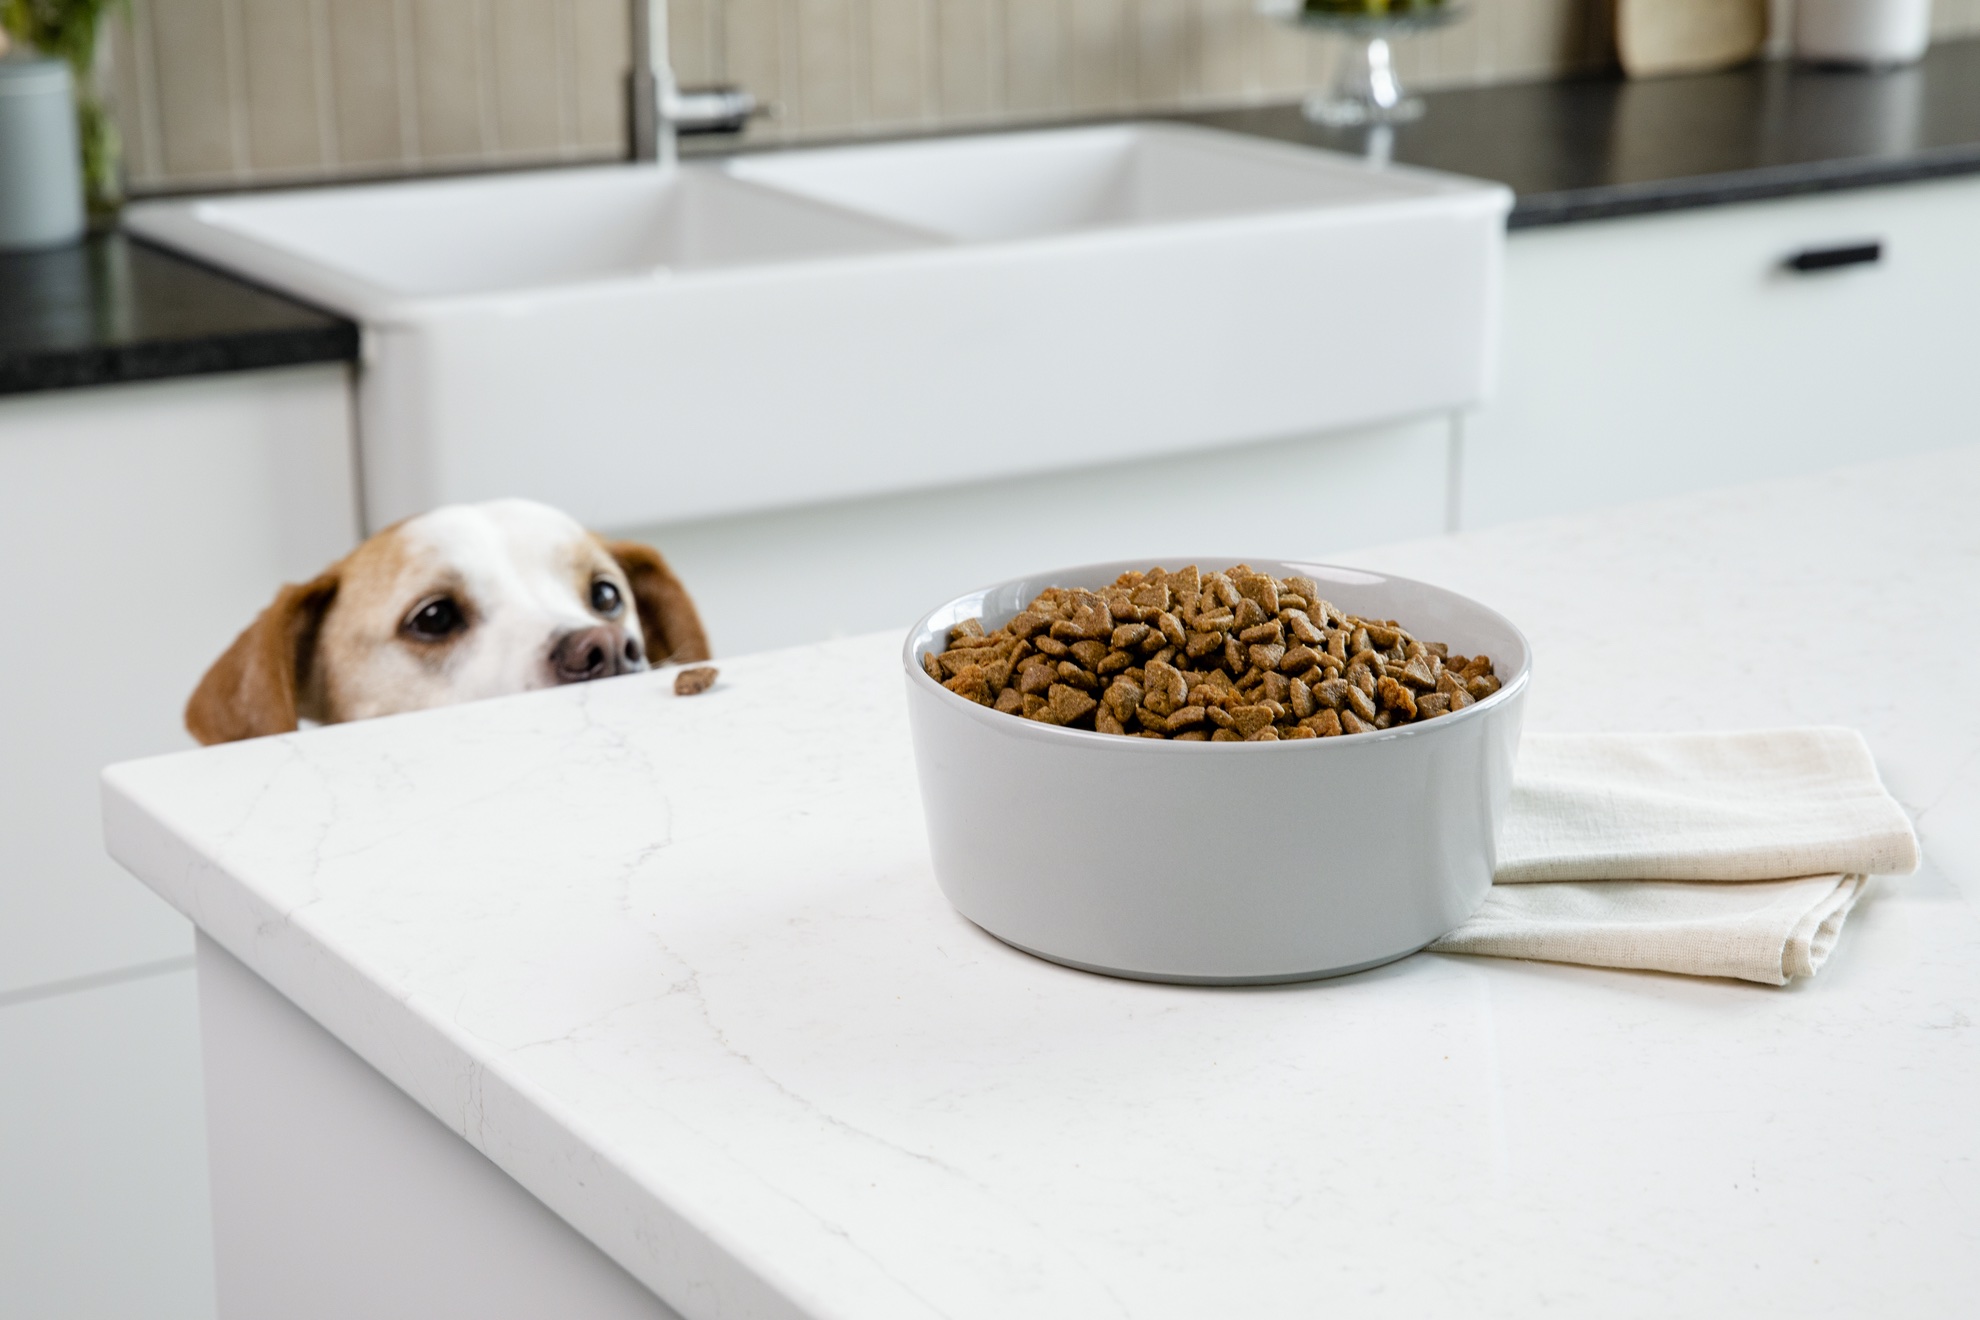 dog peeking at dog bowl full of food on kitchen counter